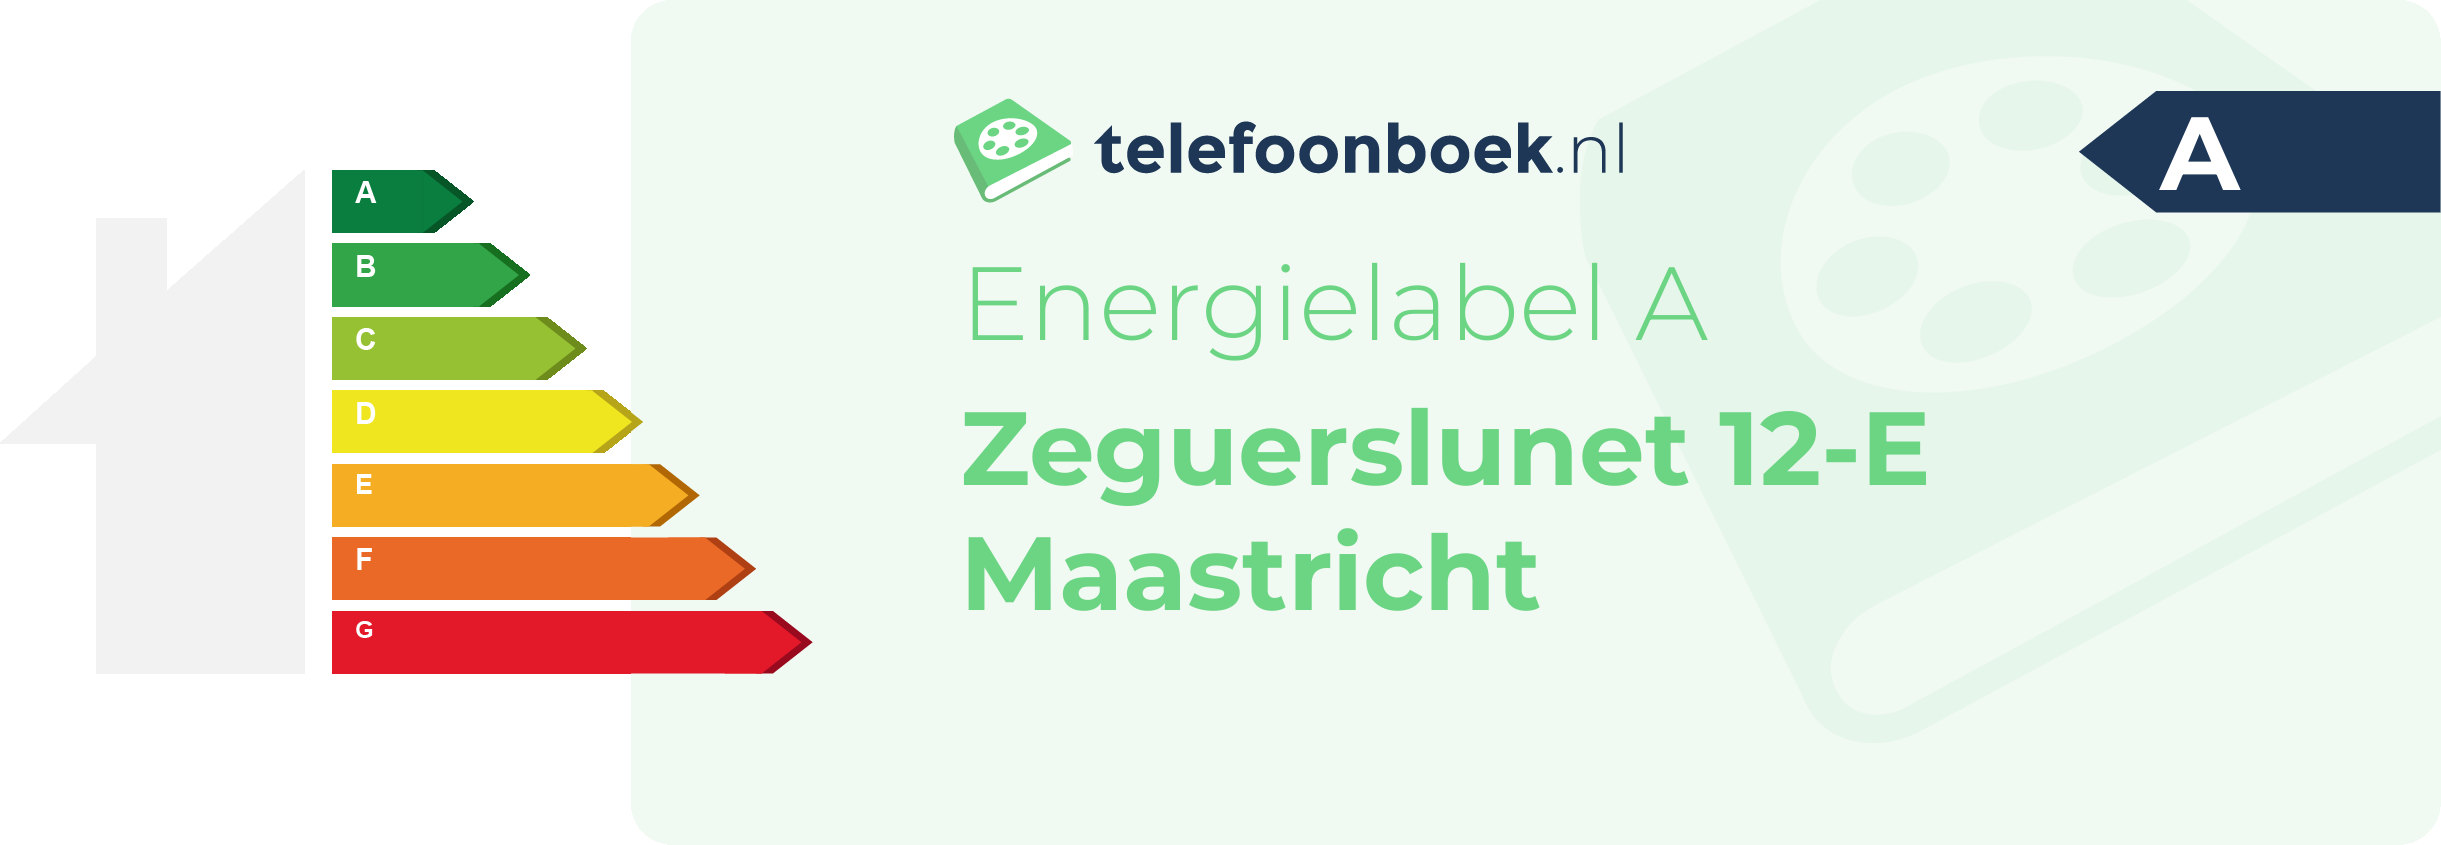 Energielabel Zeguerslunet 12-E Maastricht